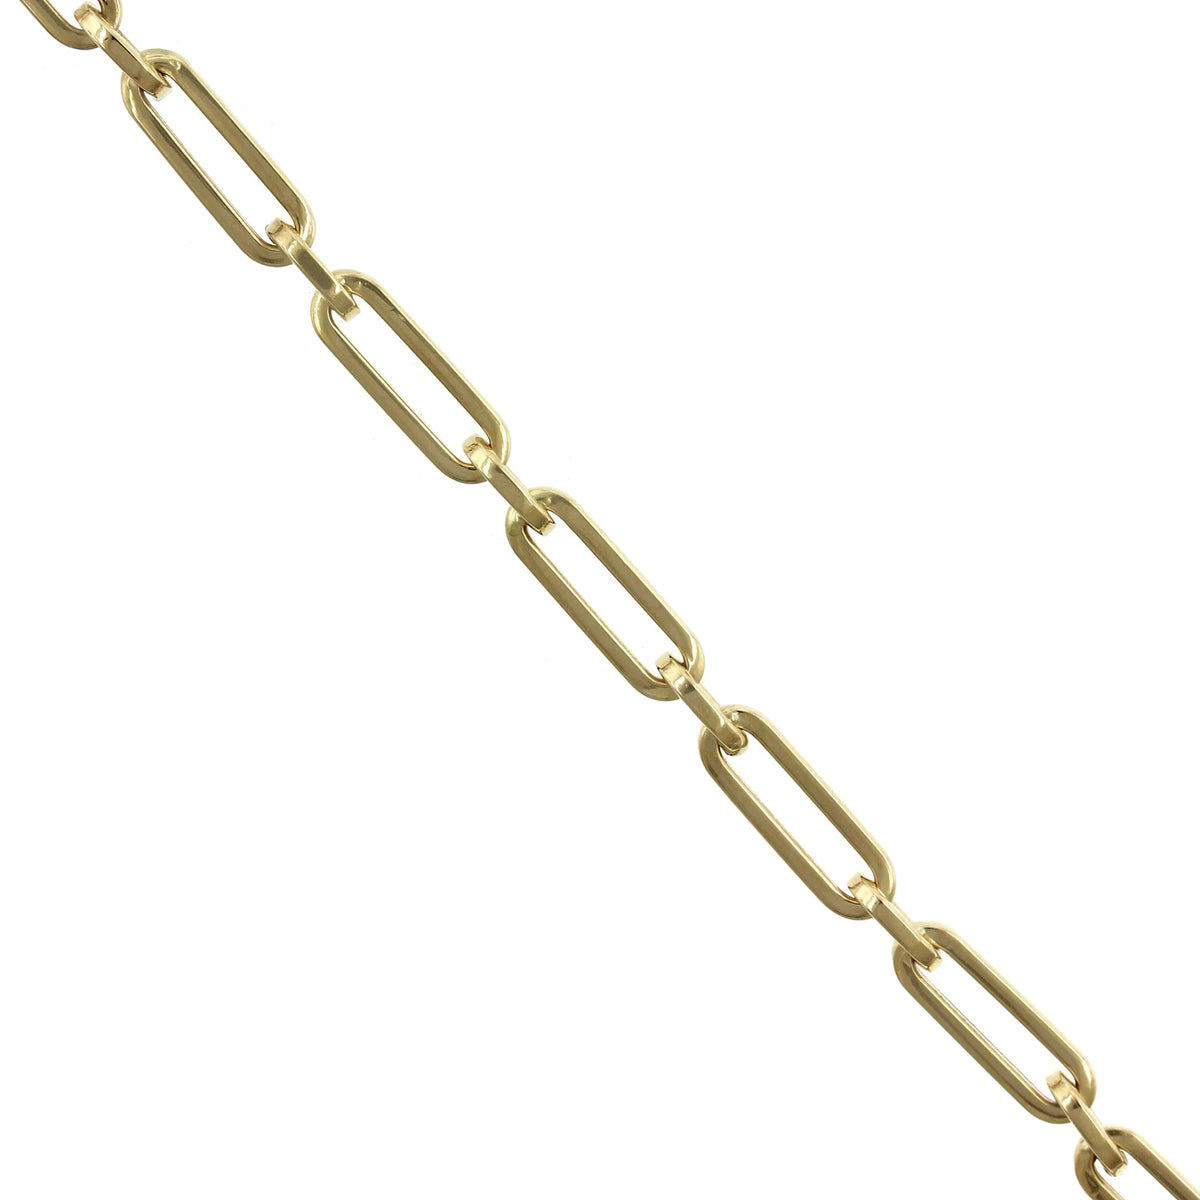 14K Yellow Gold Paperclip Chain Bracelet